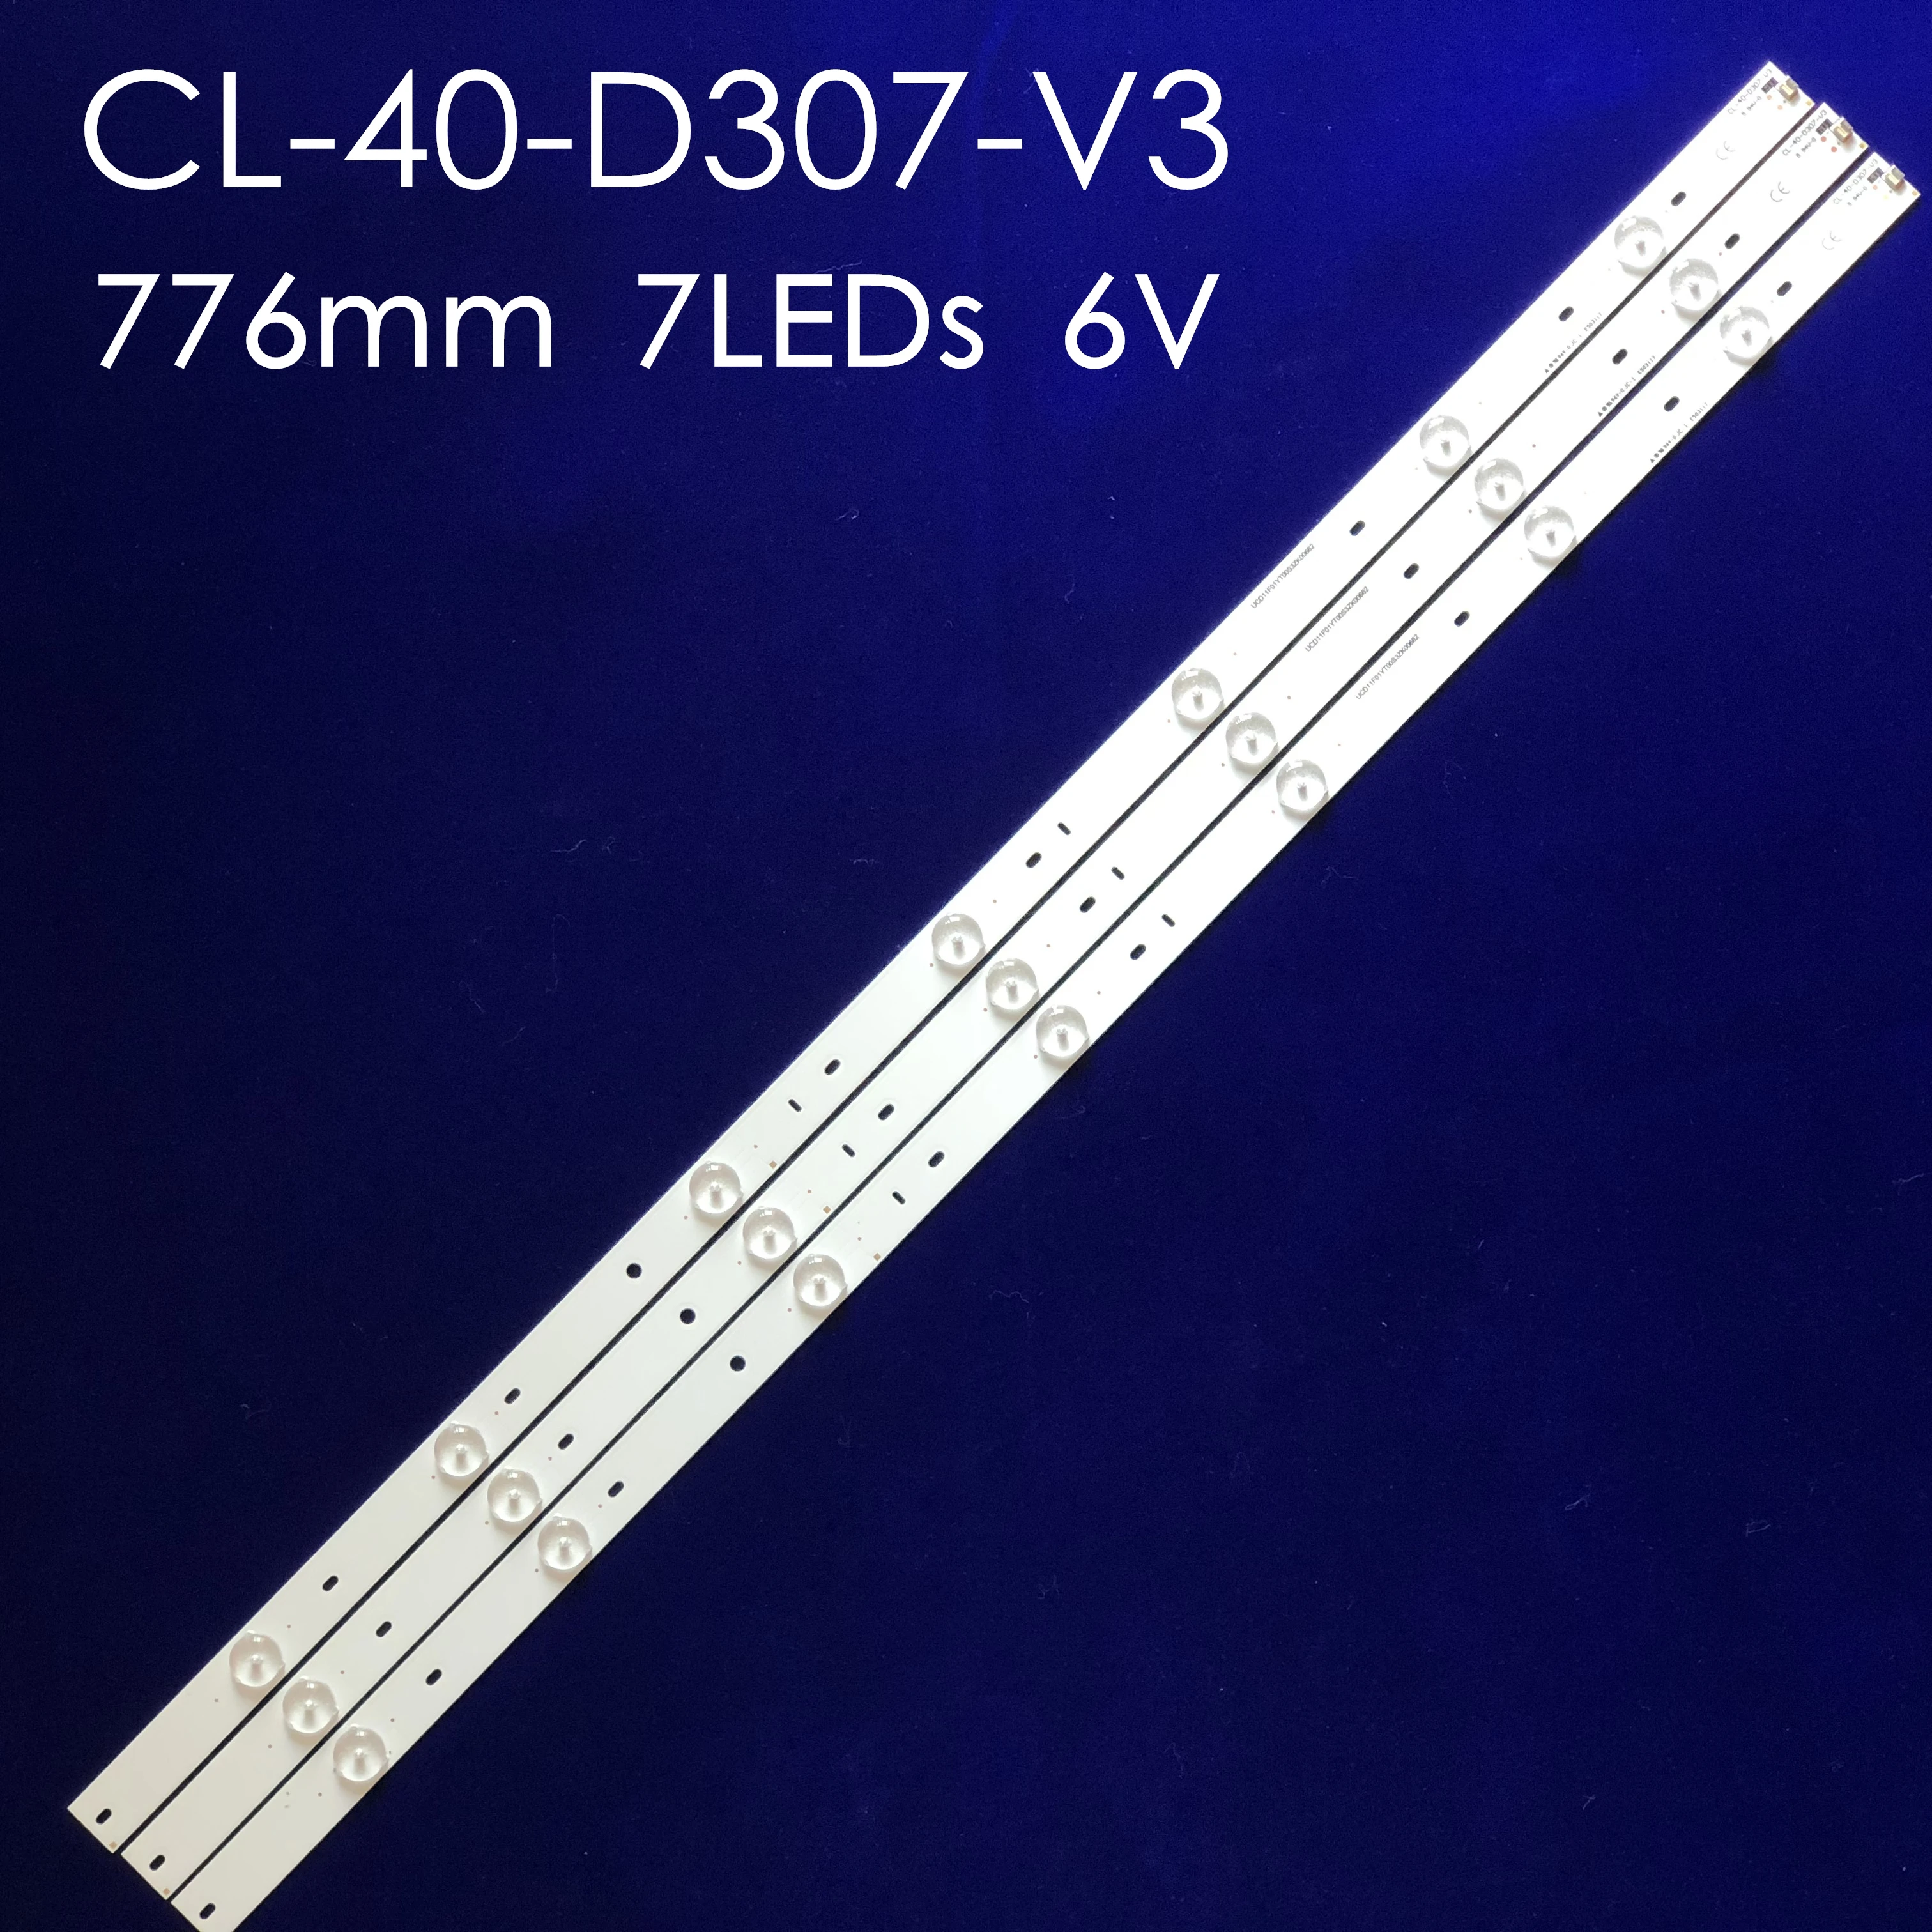 

LED Backlight Strip for 40" TPV TPT400LA-HM06 40PFL5708/F7 40PFL3188 40pfg4109 40phg4109 40PFT4109/60 40PFL3088H CL-40-D307-V3